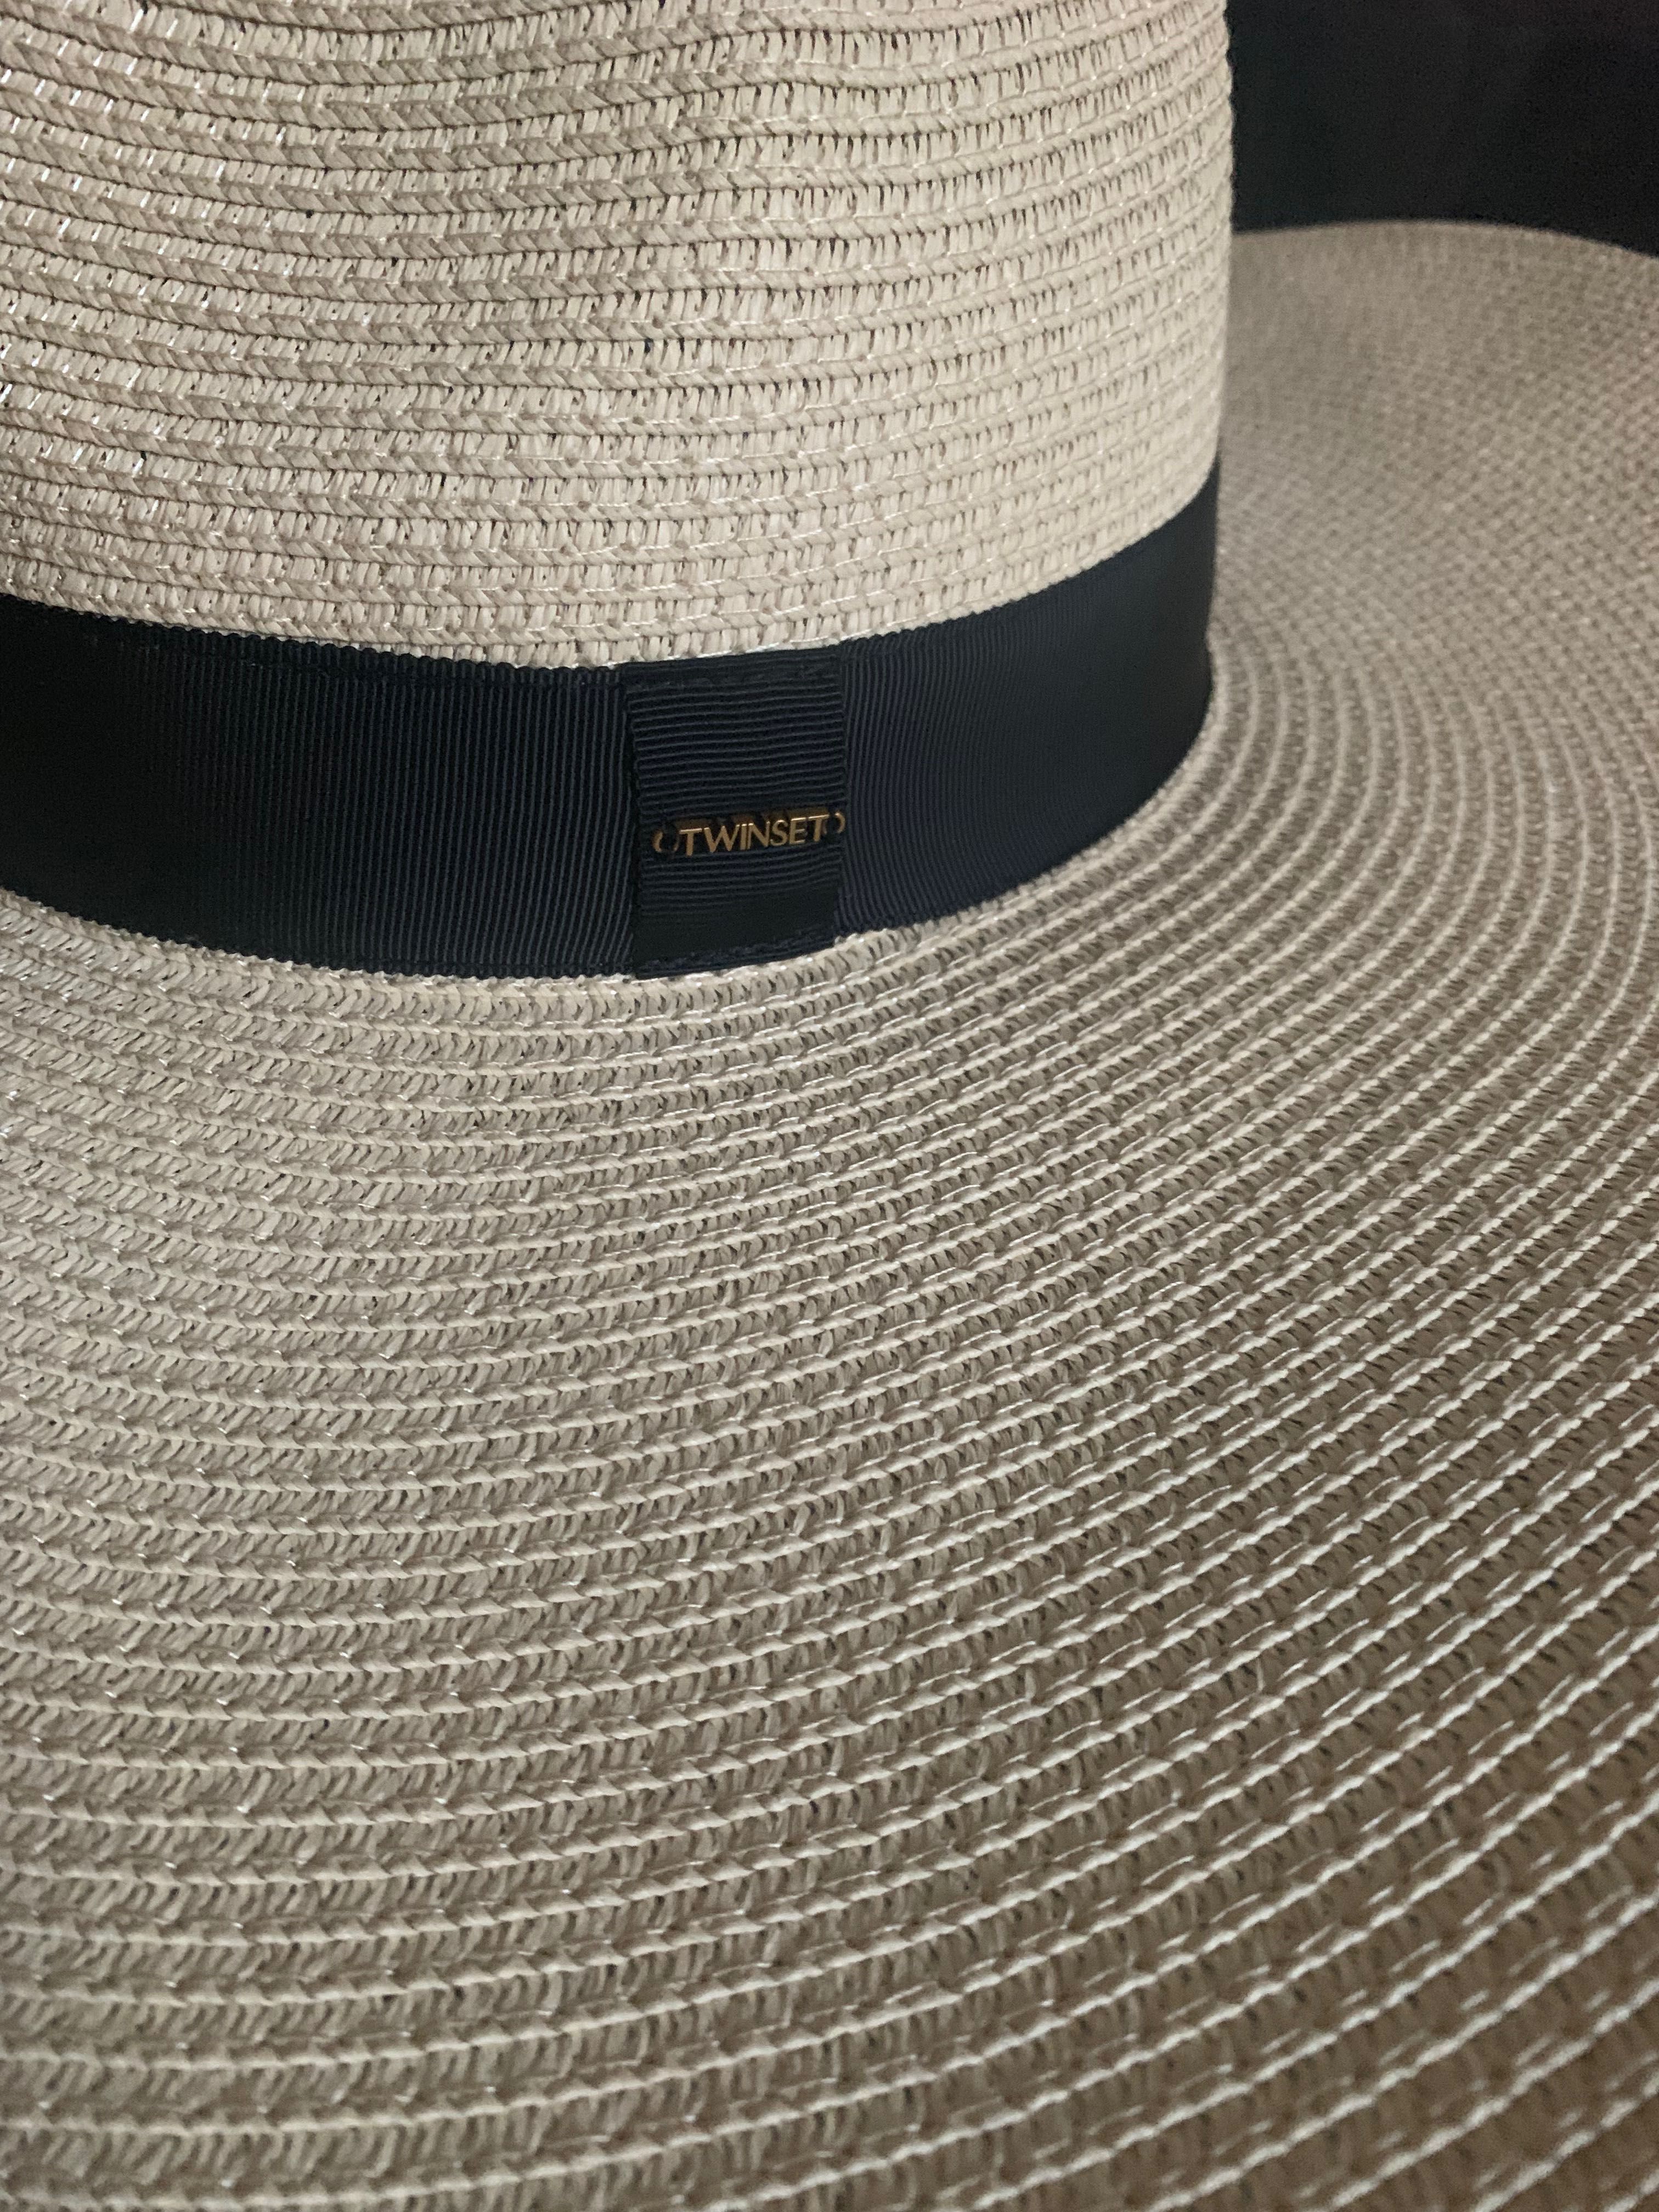 Twin set -шикарная шляпа